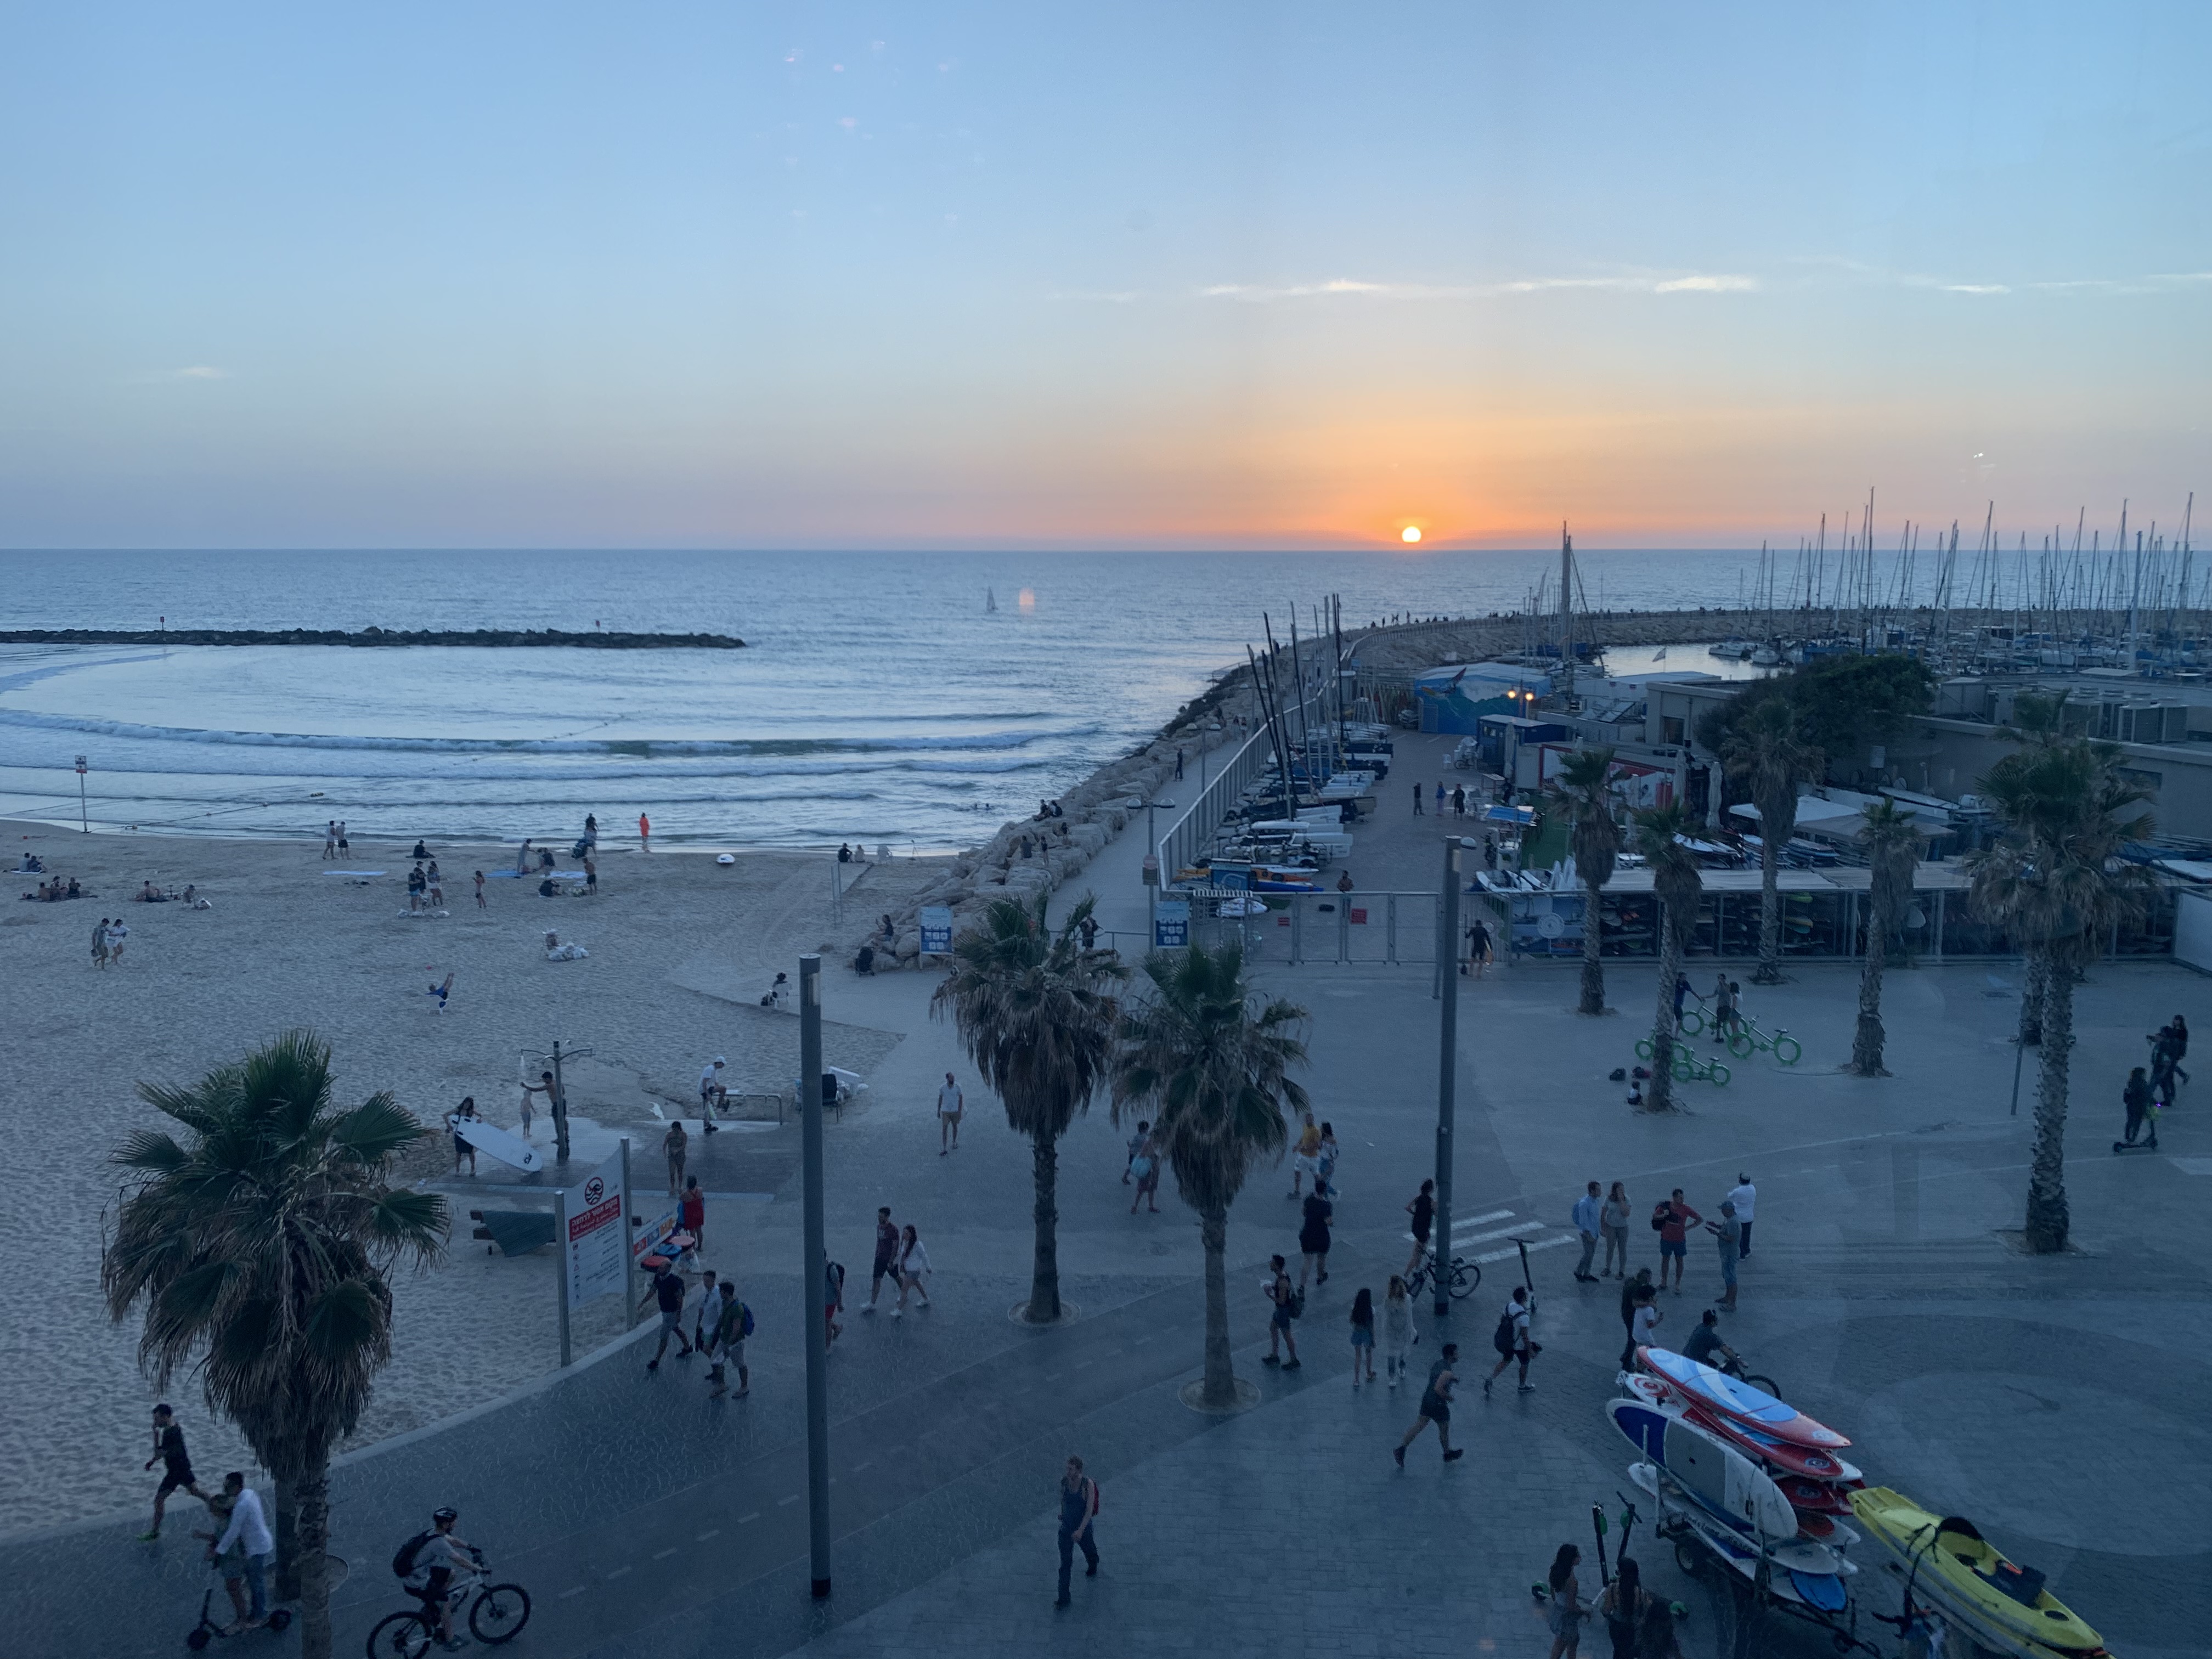 Tel Aviv Marina, north of Gordon Beach